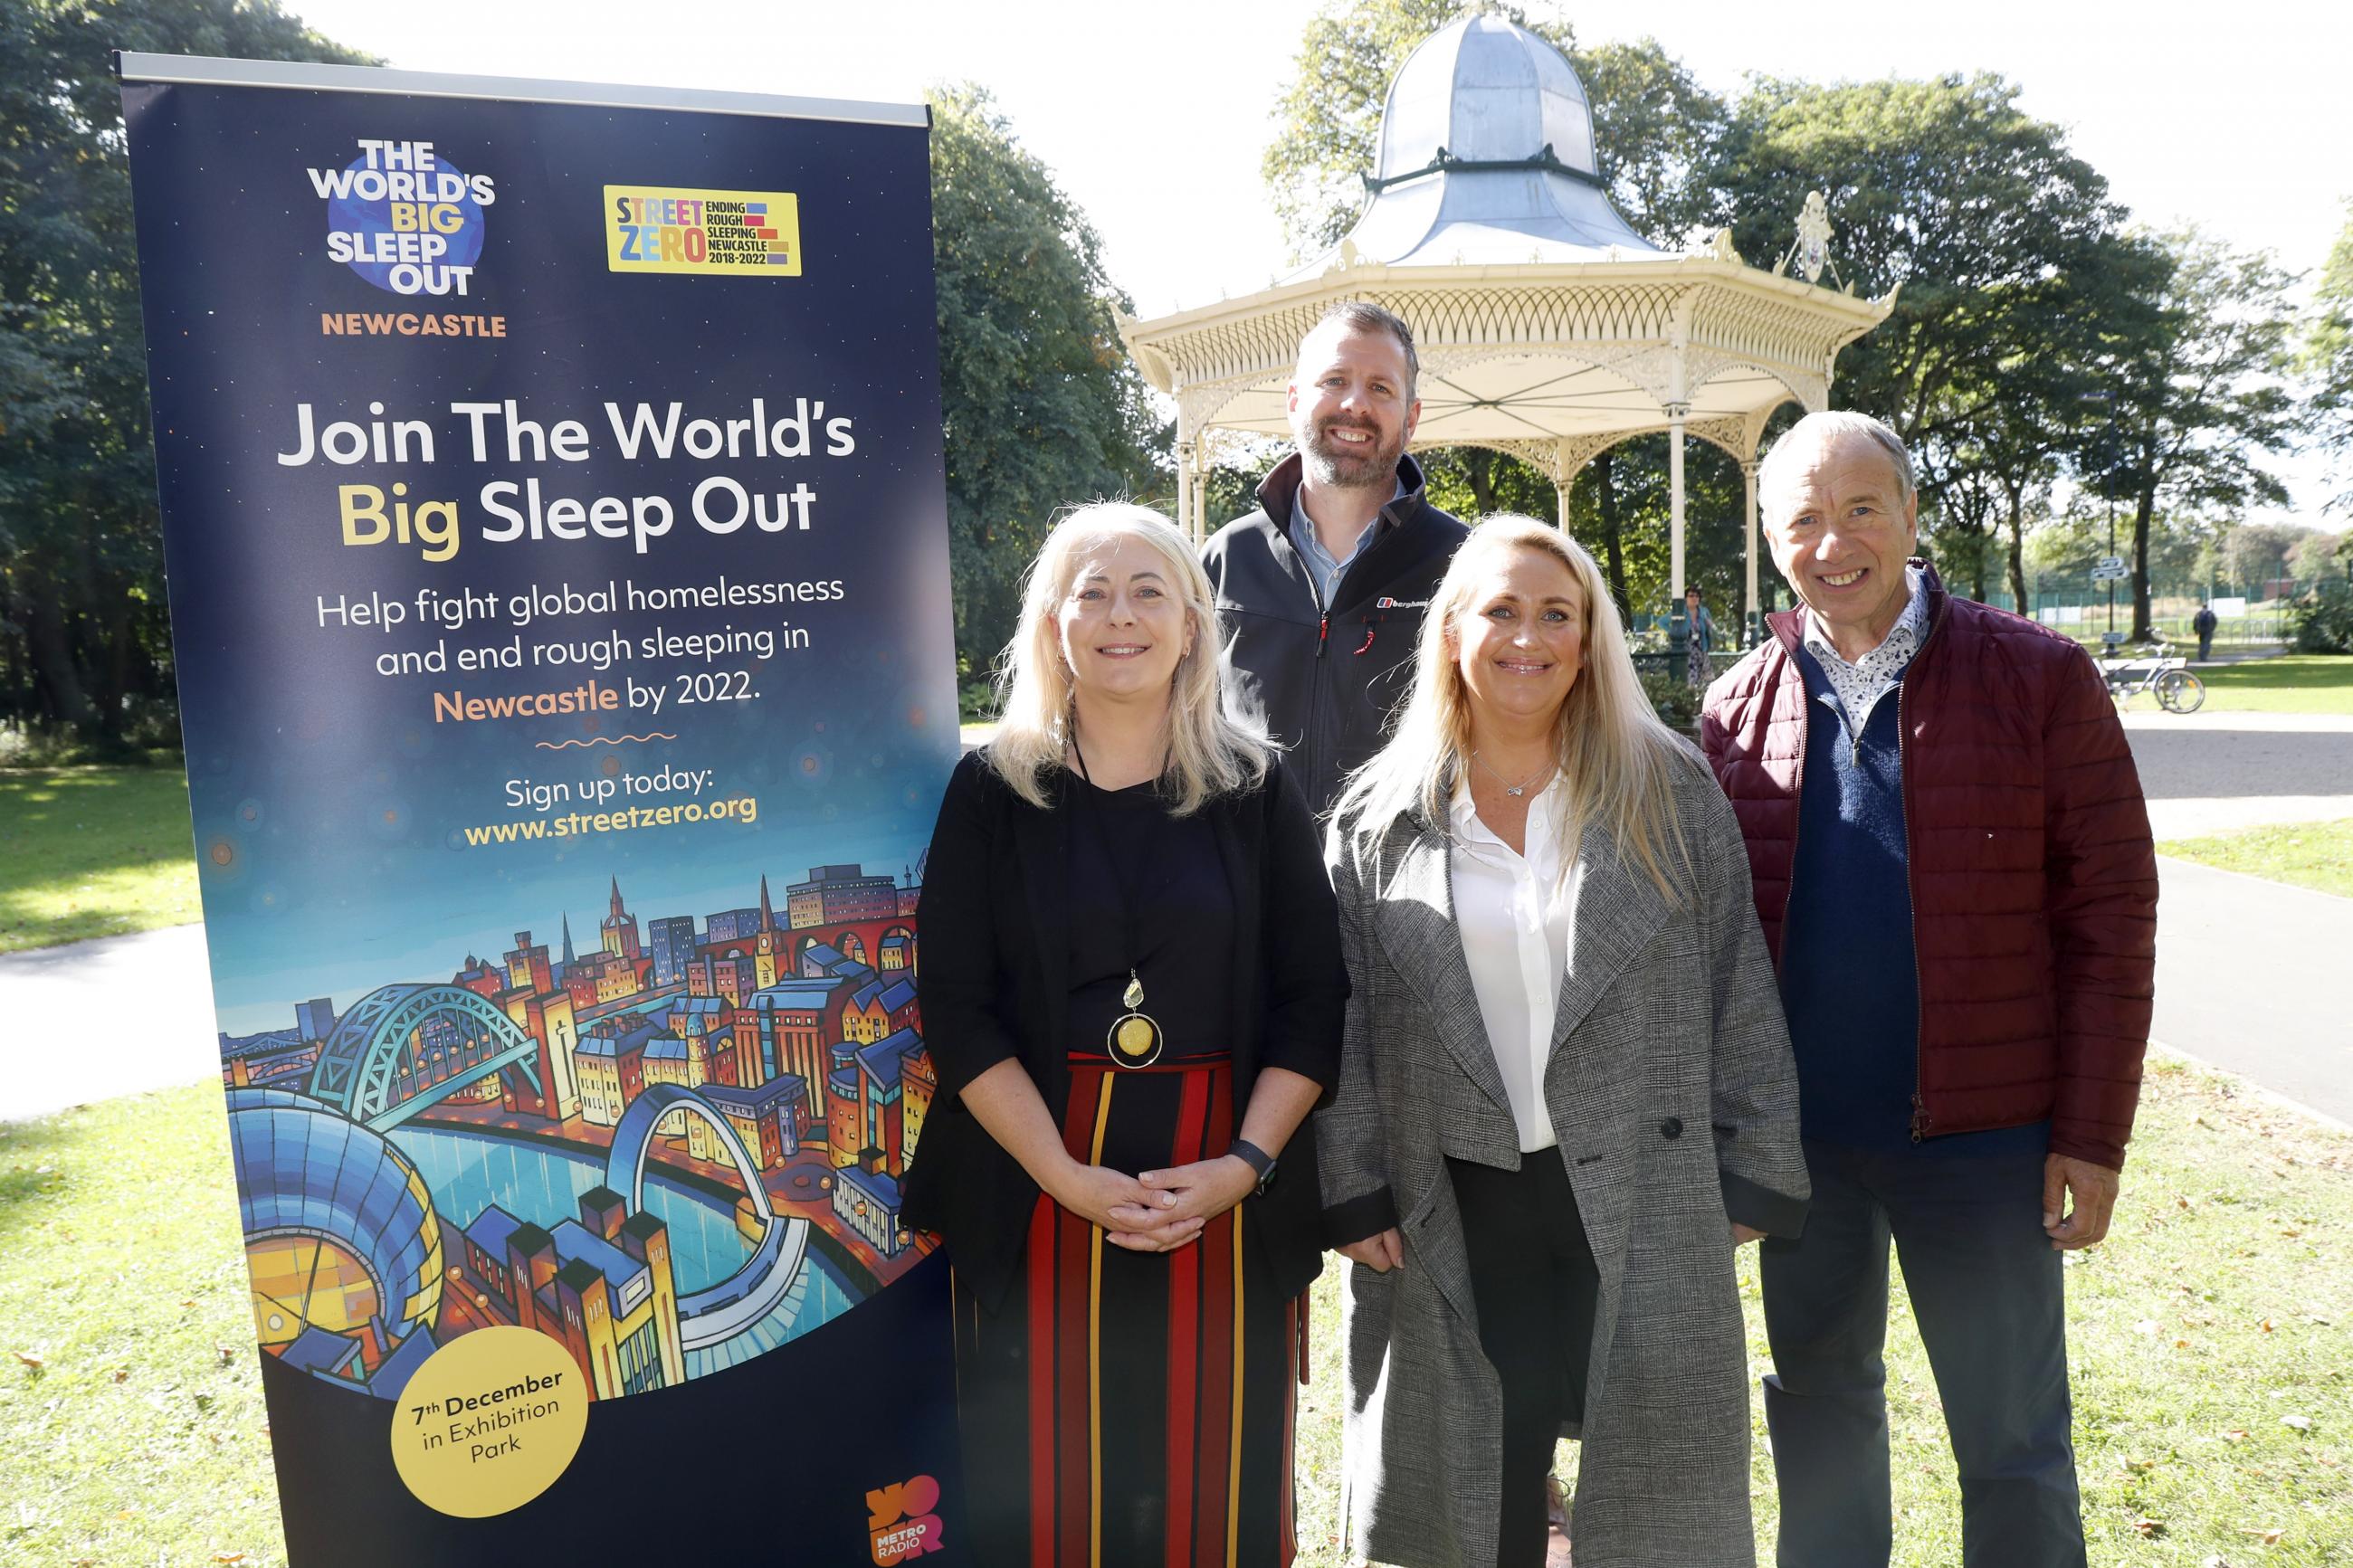 Bob Eldridge, Cllr Linda Hobson, James Cross and Natasha Addis of the World's Big Sleepout 